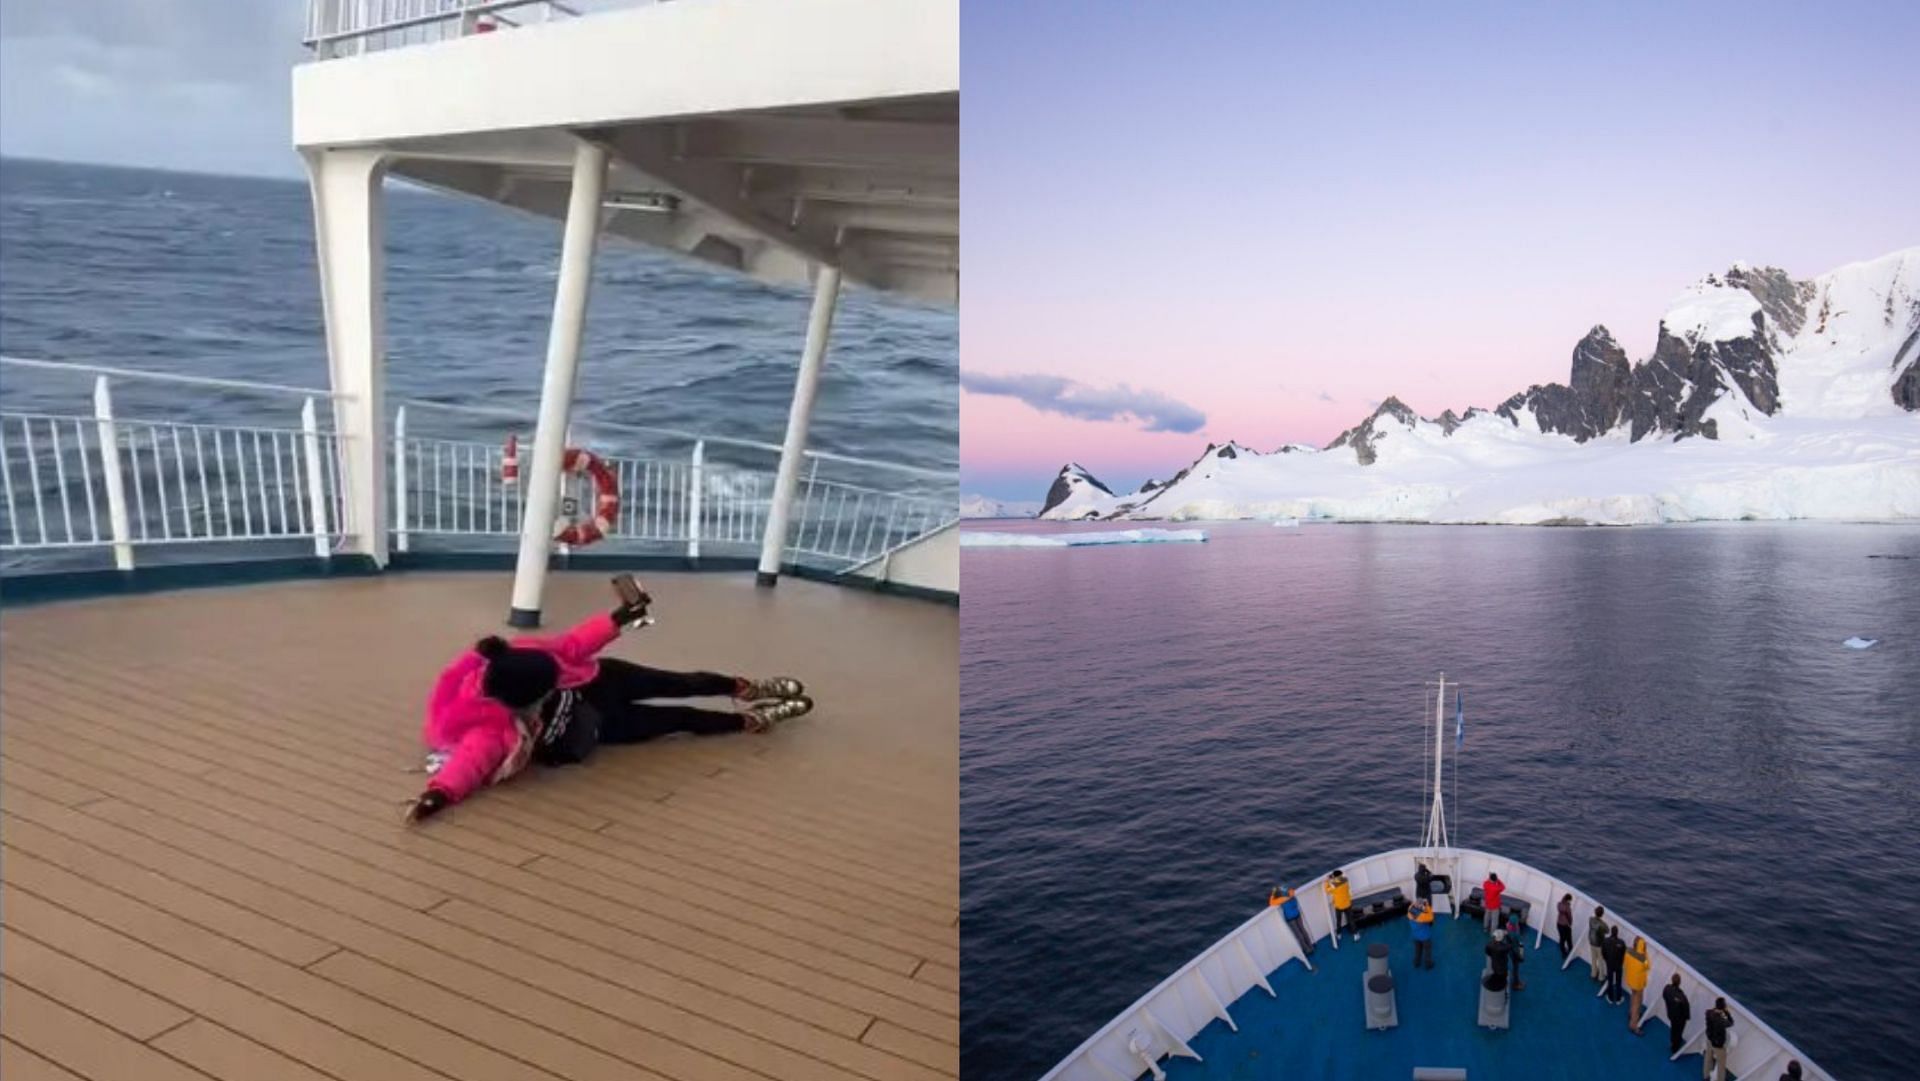 Passenger sliding across the deck while recording themselves at Drake Passage. TikTok videos go viral. (Image via TikTok/@jordannewton, Bernard Neal)